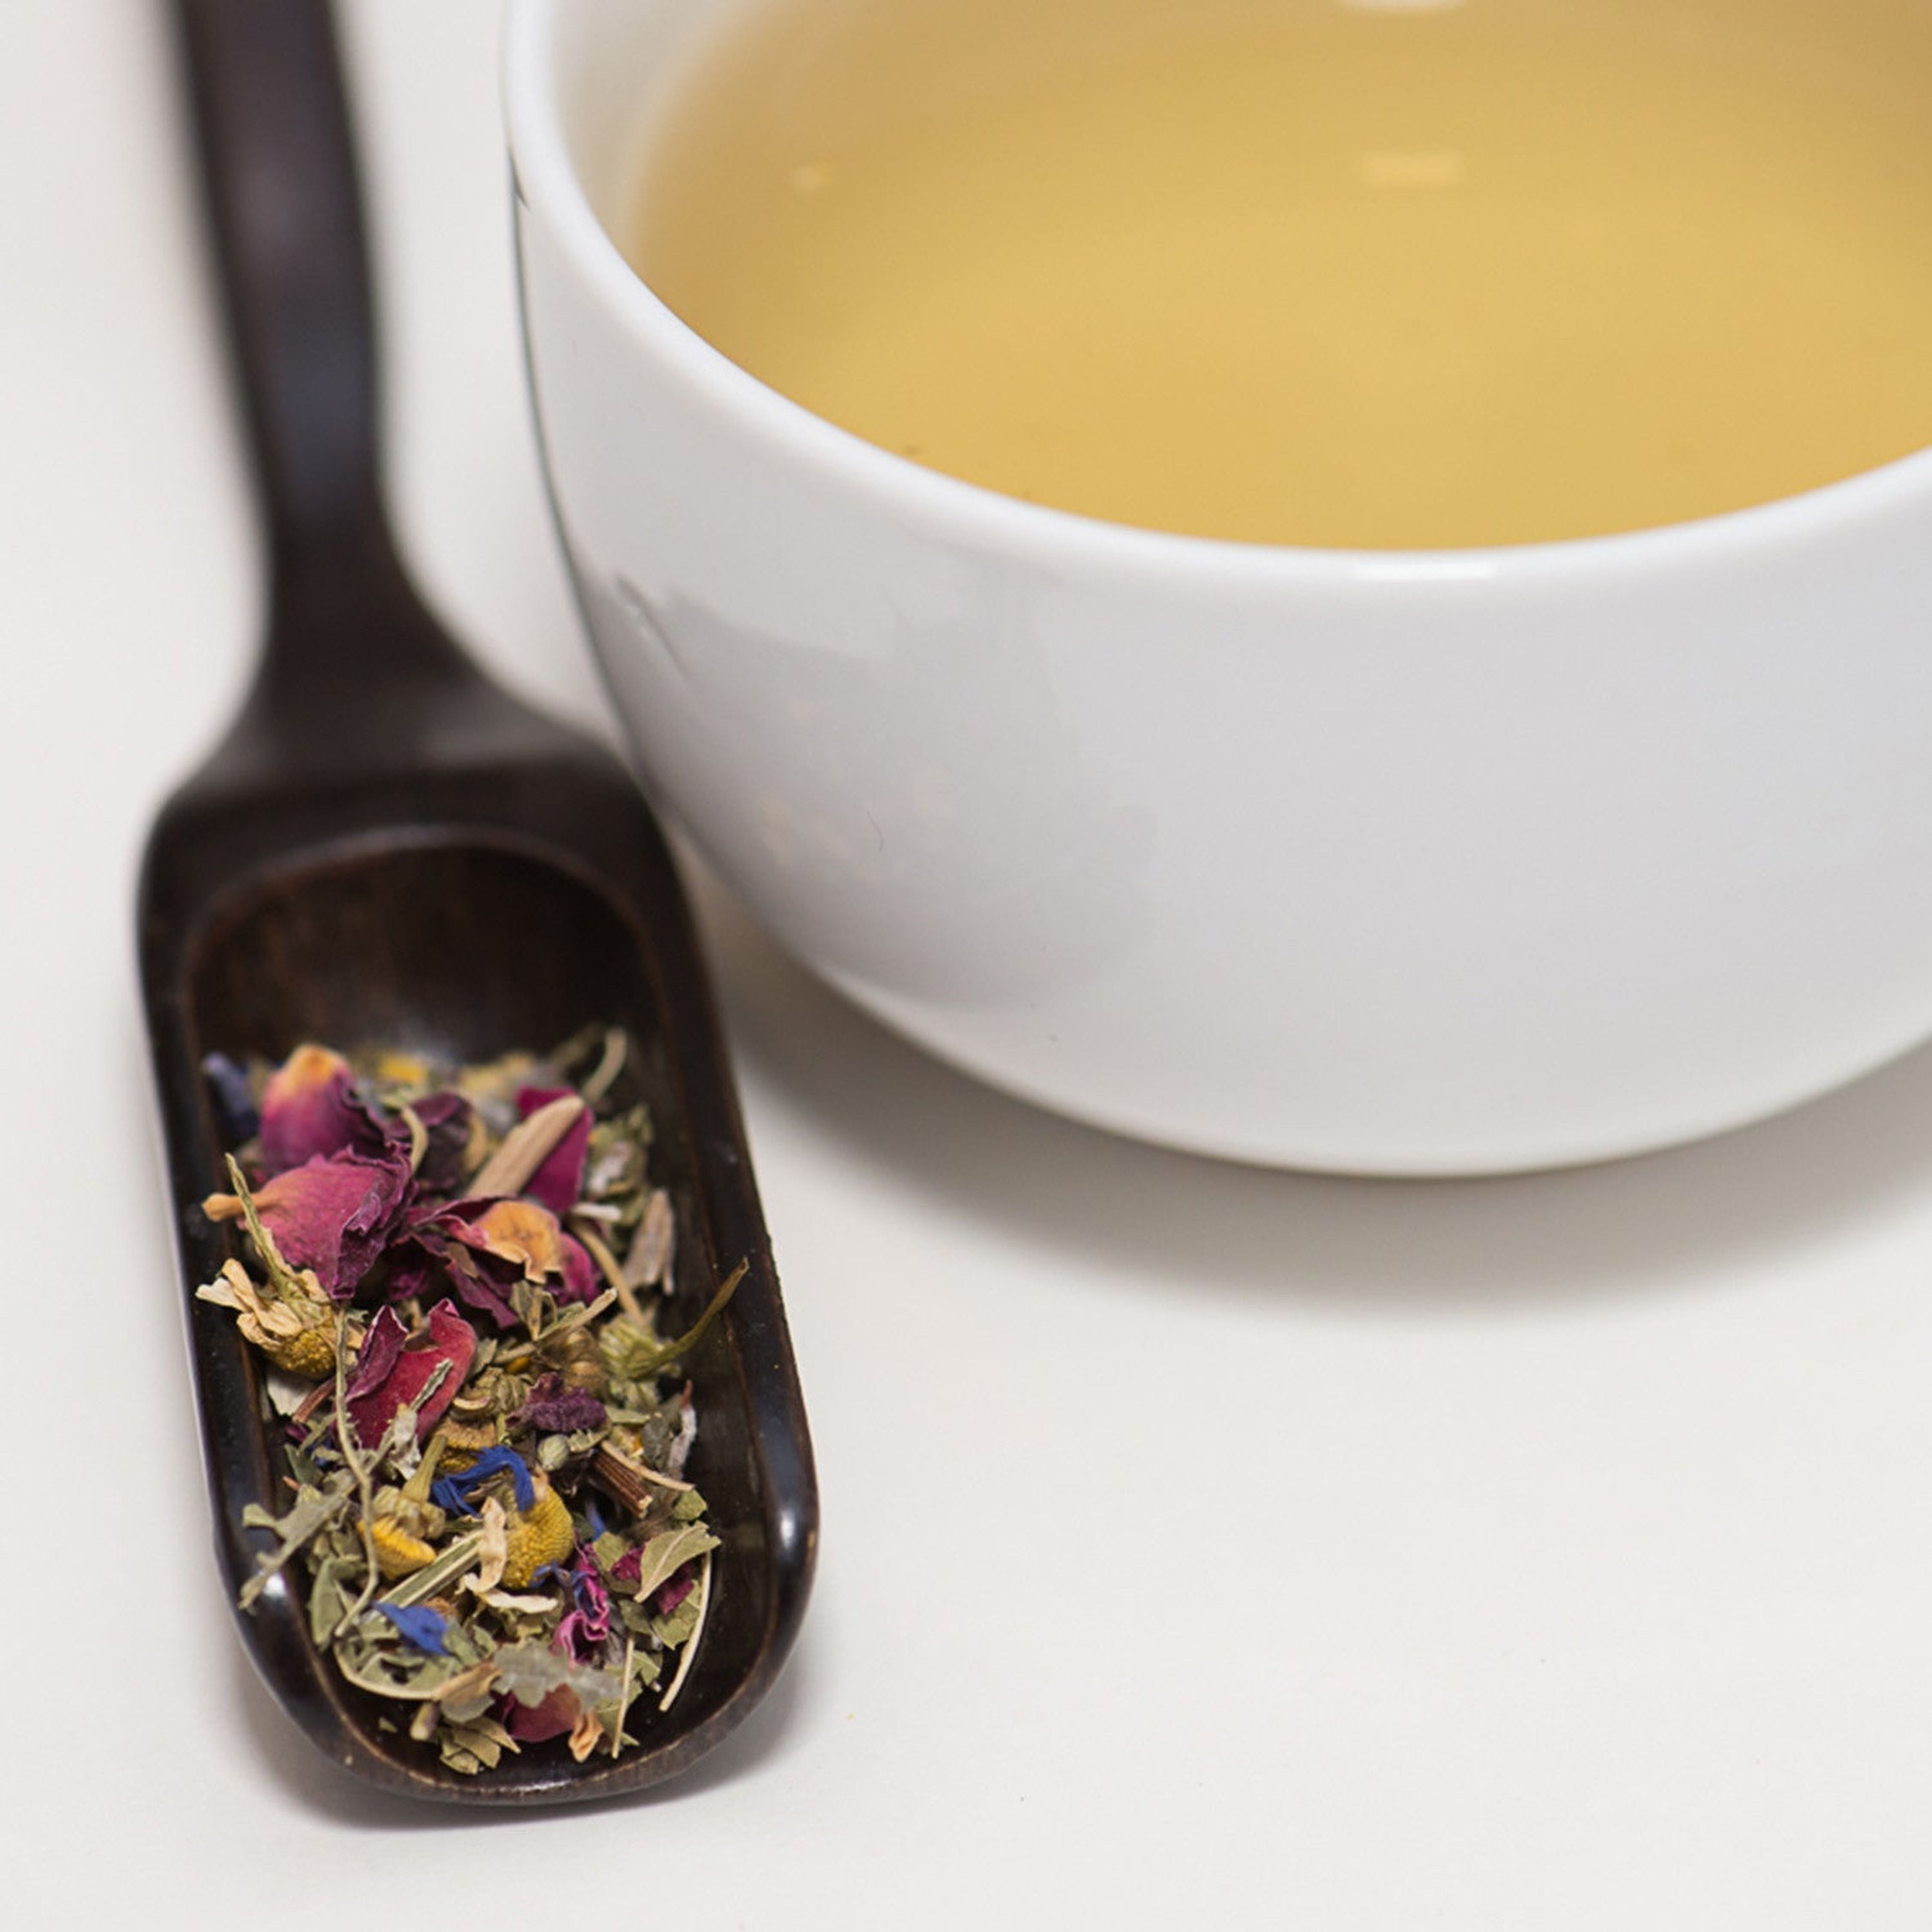 Serenitea Organic Herbal Tea - Tea for Relaxation